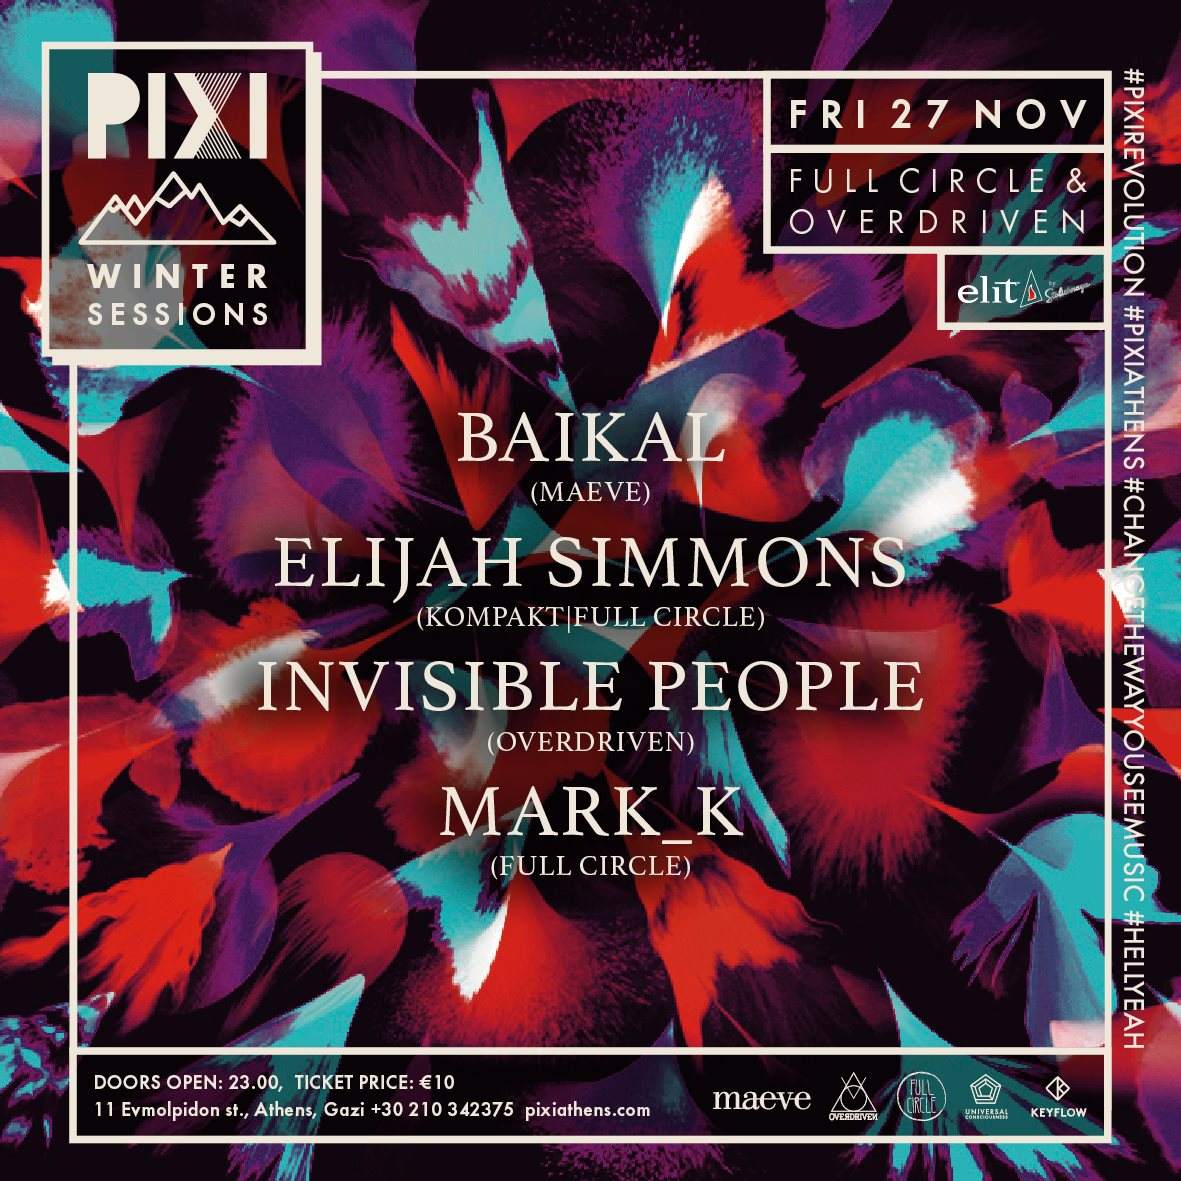 Pixi Winter Sessions: Full Circle & Overdriven present Baikal, Elijah Simmons, Invisible Peopl - Página frontal